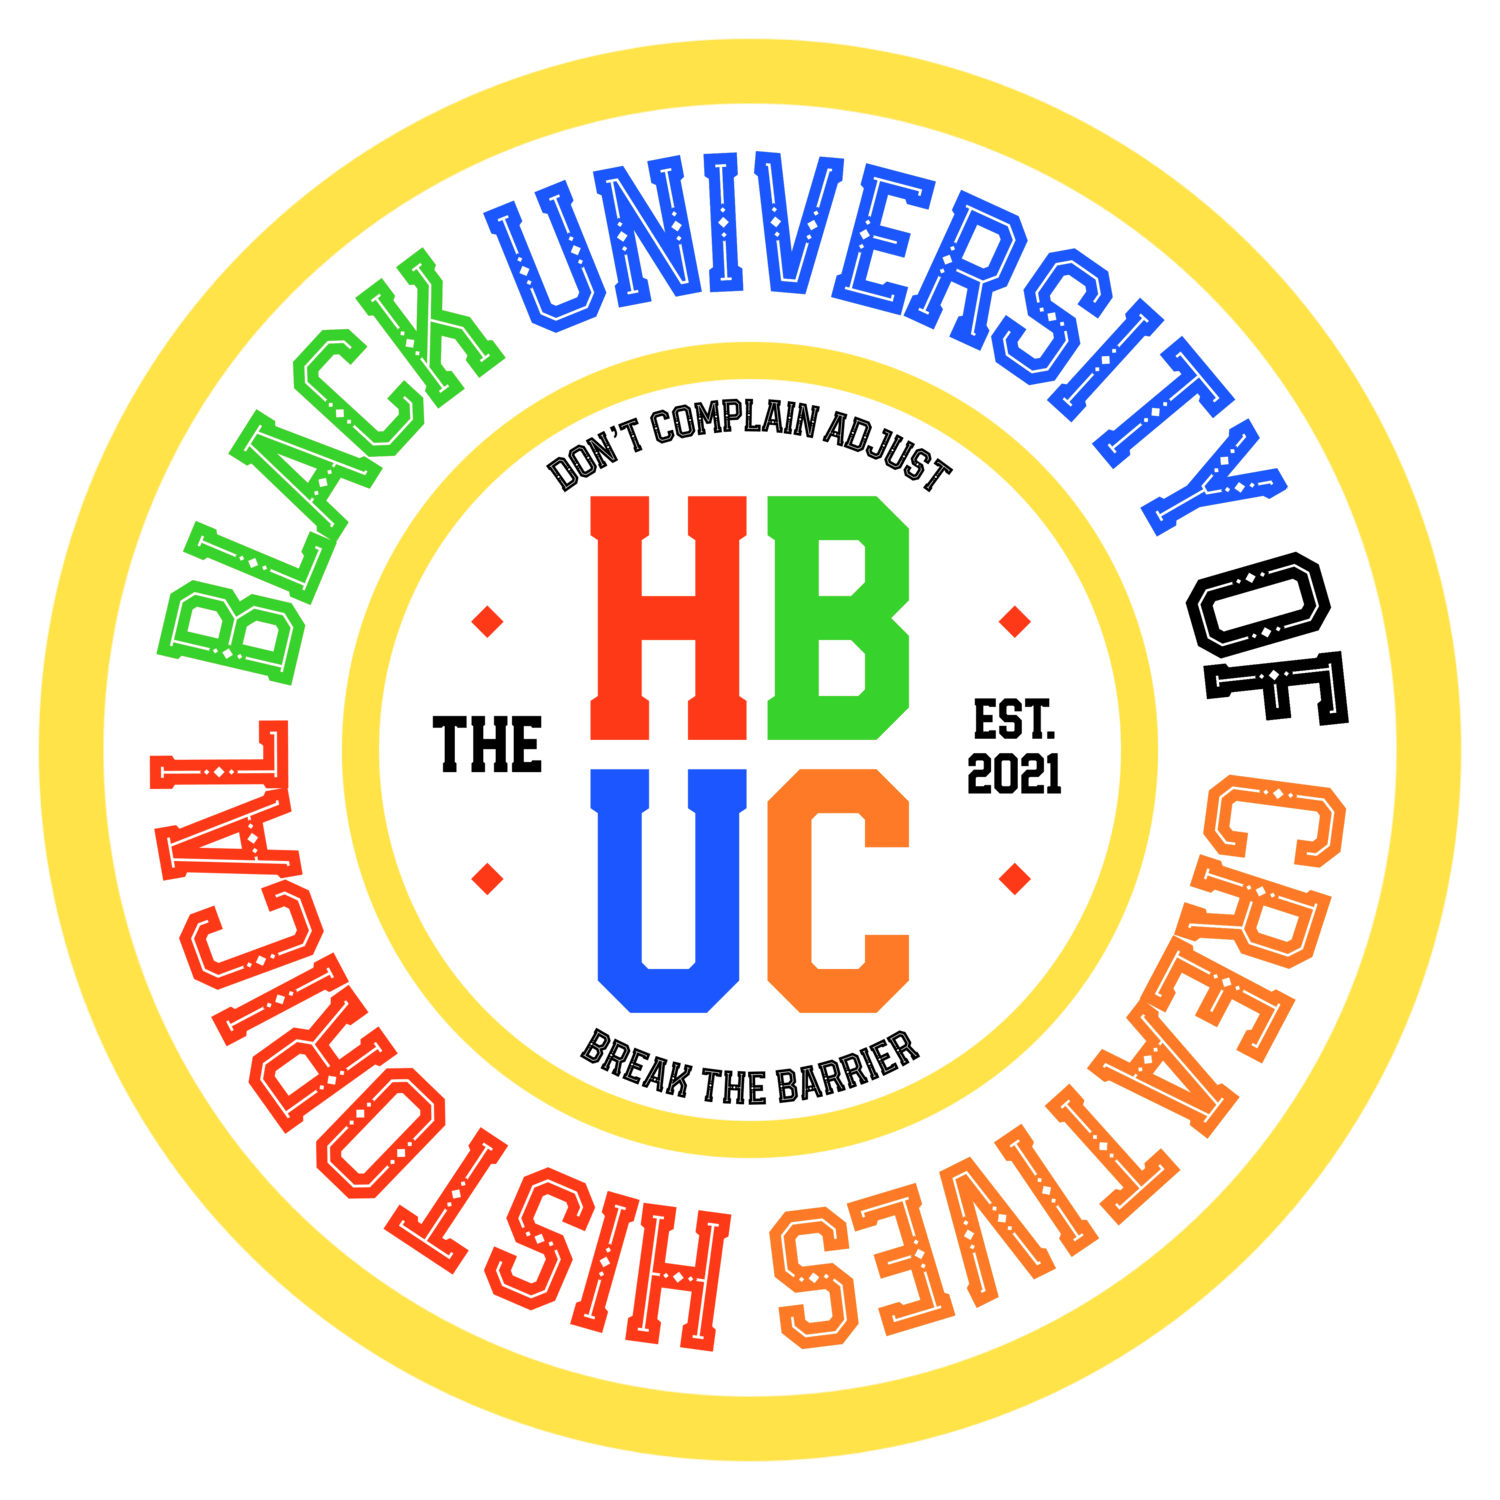 The HBUC (The Historical Black University of Creatives) logo